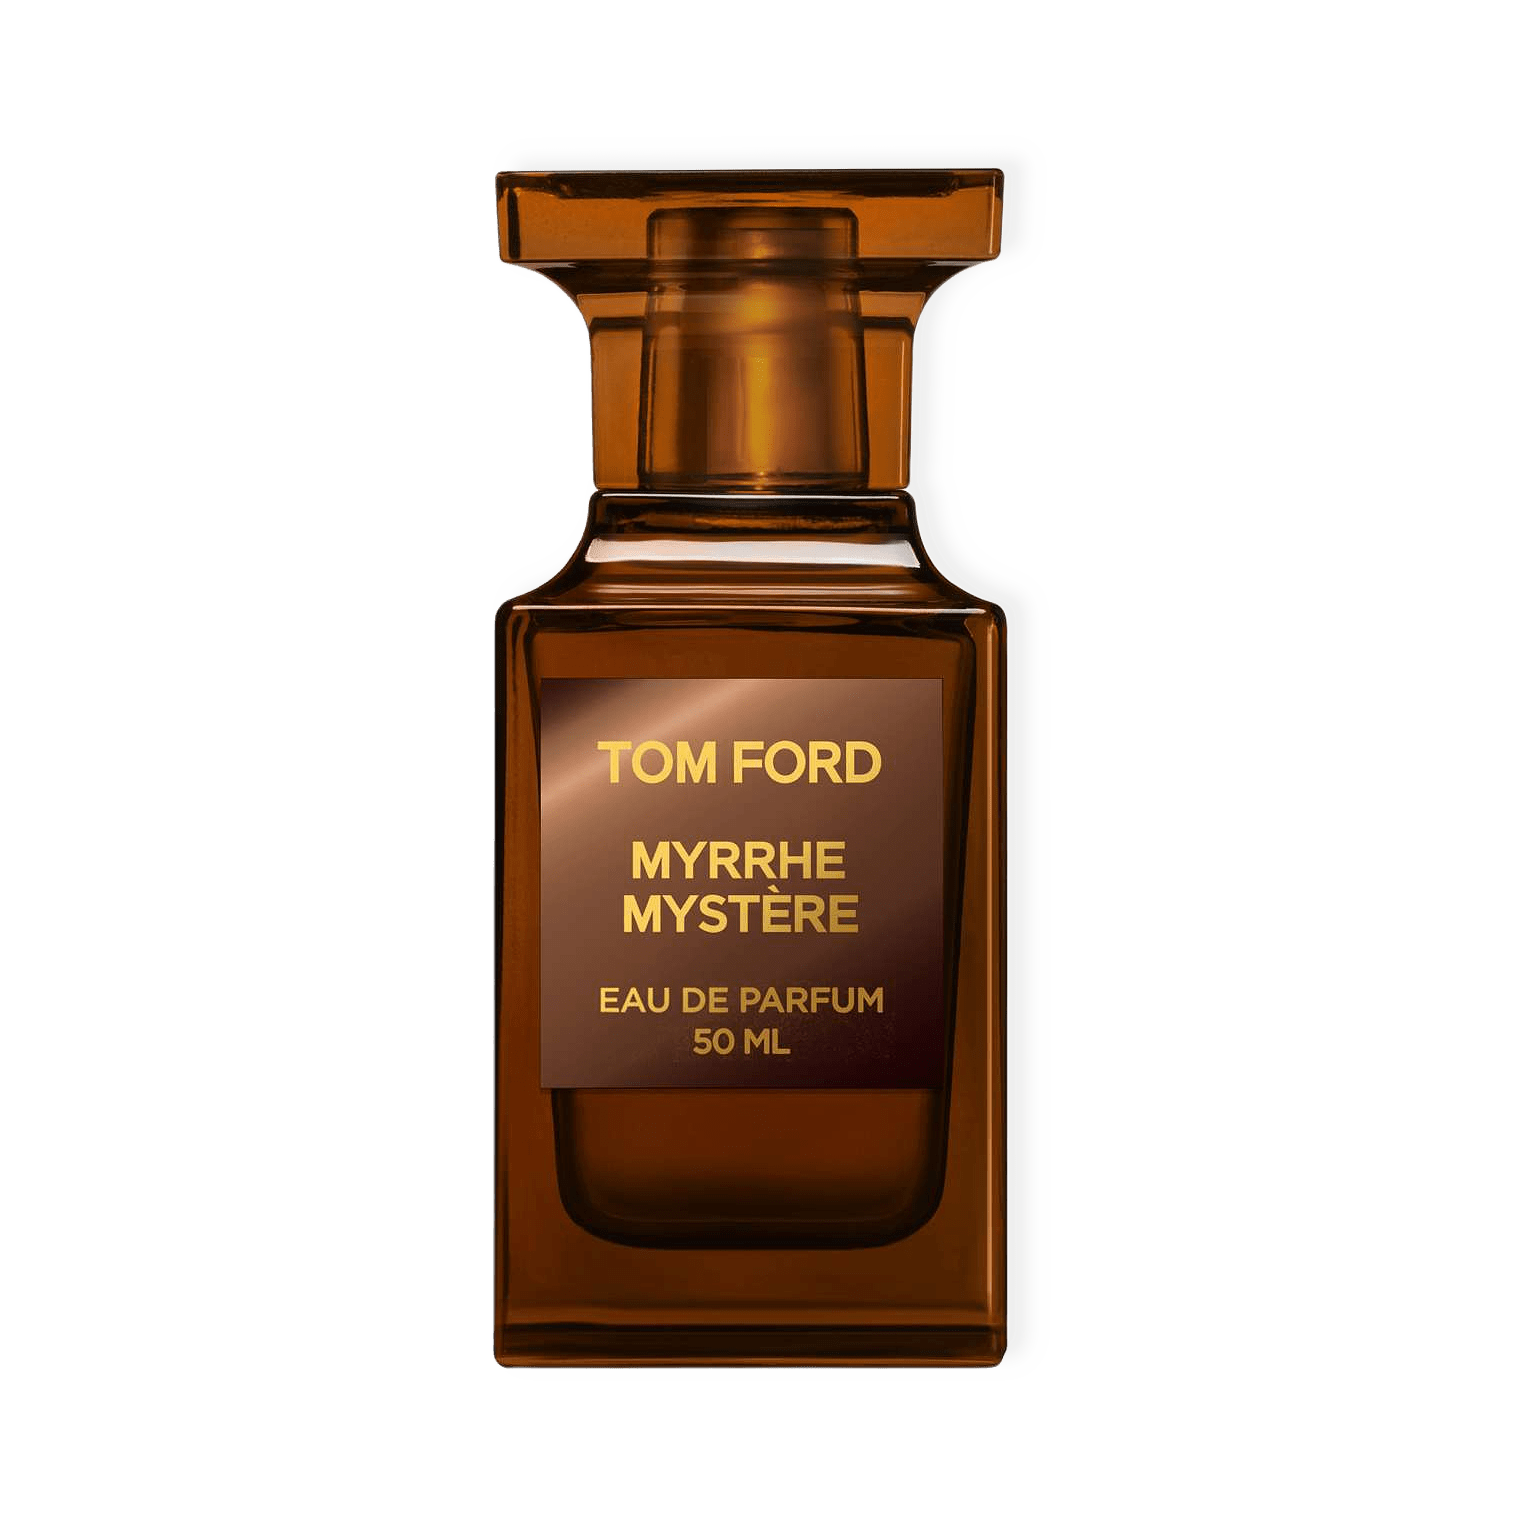 Myrrhe Mystere Eau de Parfum från Tom Ford